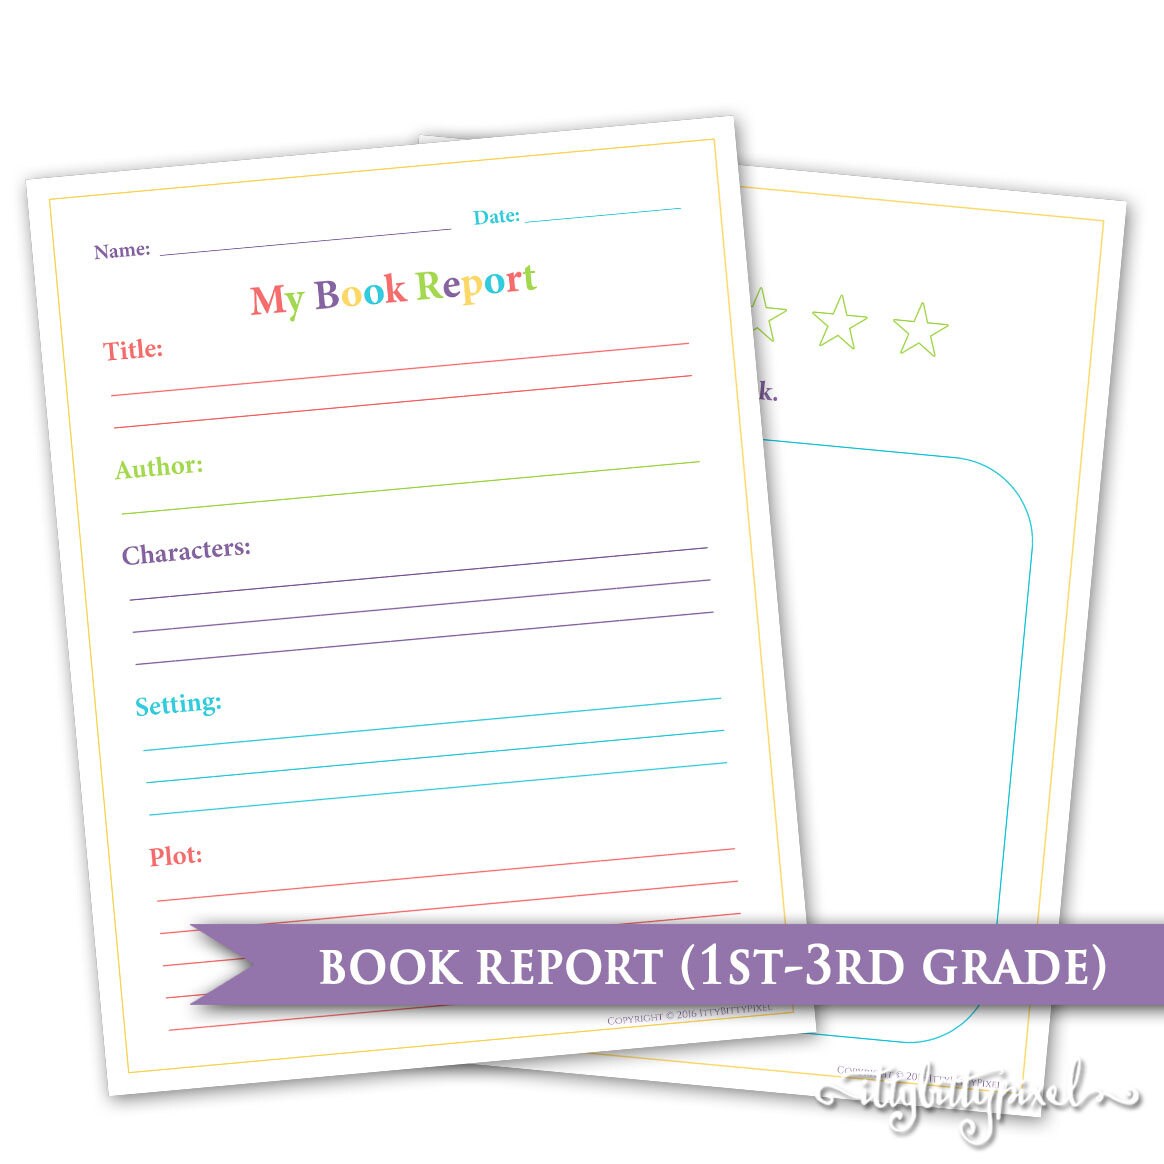 Custom made book reports